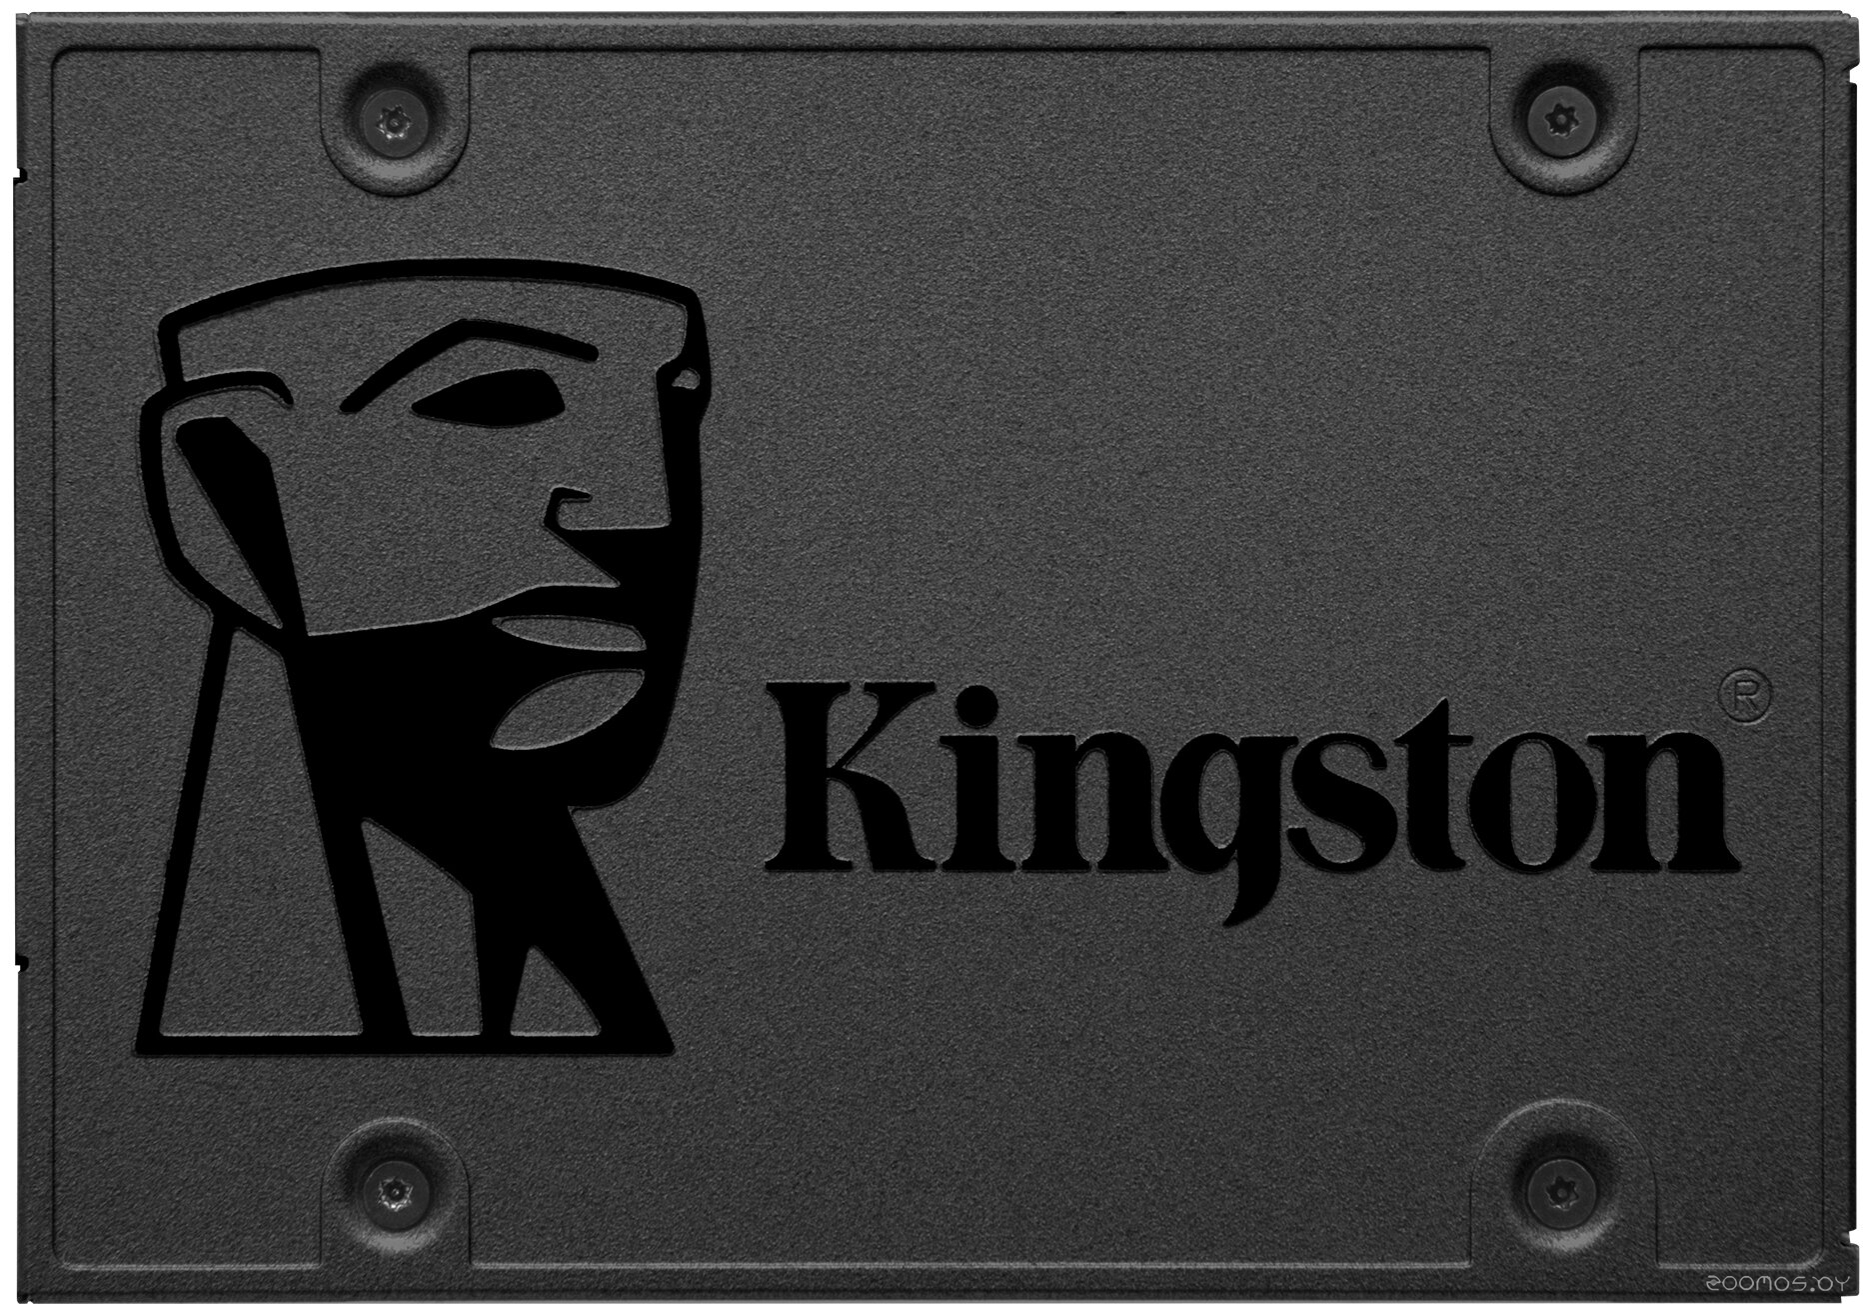 SSD Kingston a400 120gb [sa400s37/120g]     